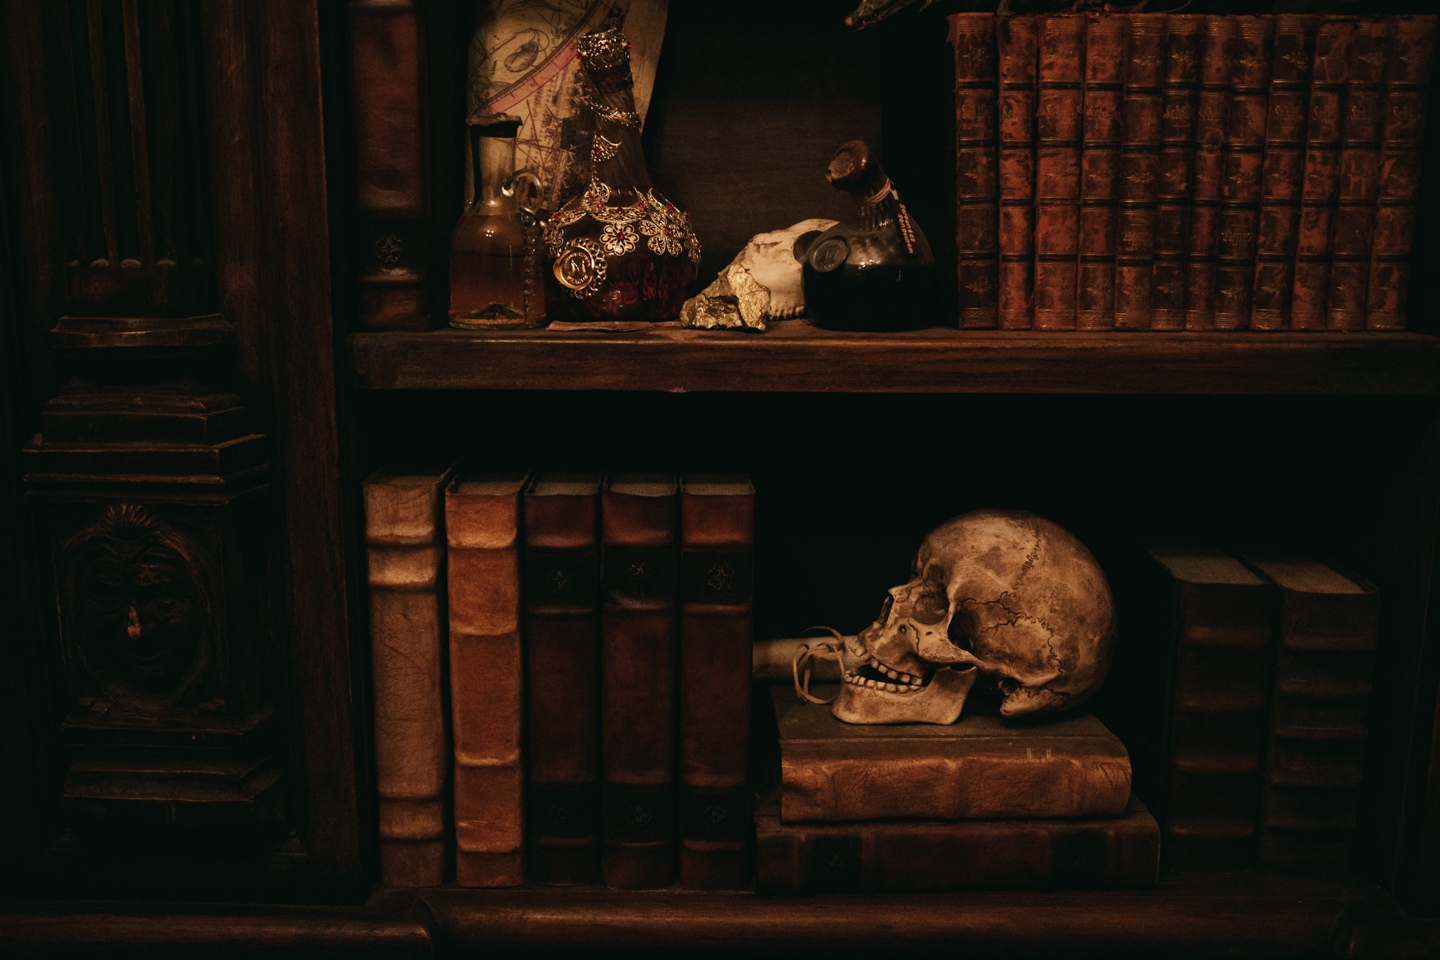 Speculum Alchemiae bookshelf with replica books and skulls